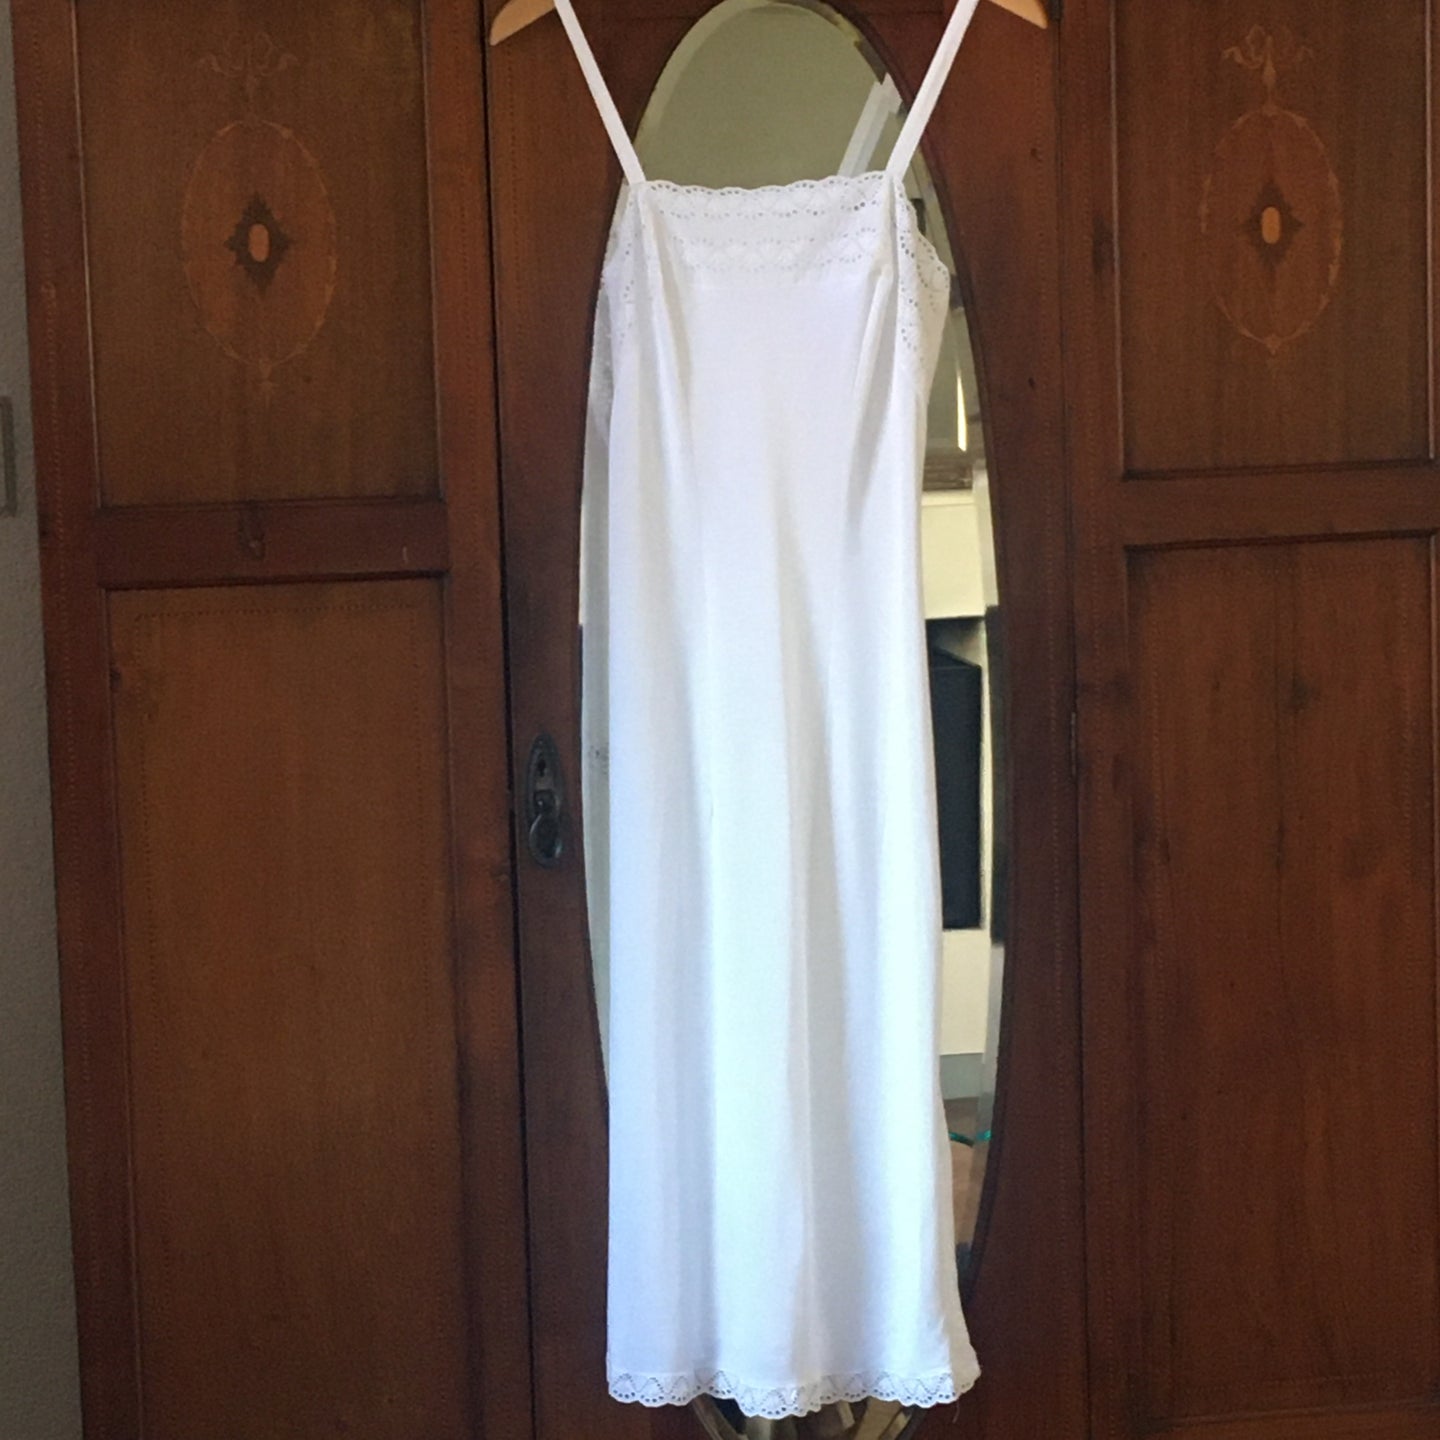 Vintage white cotton nightdress, size XS